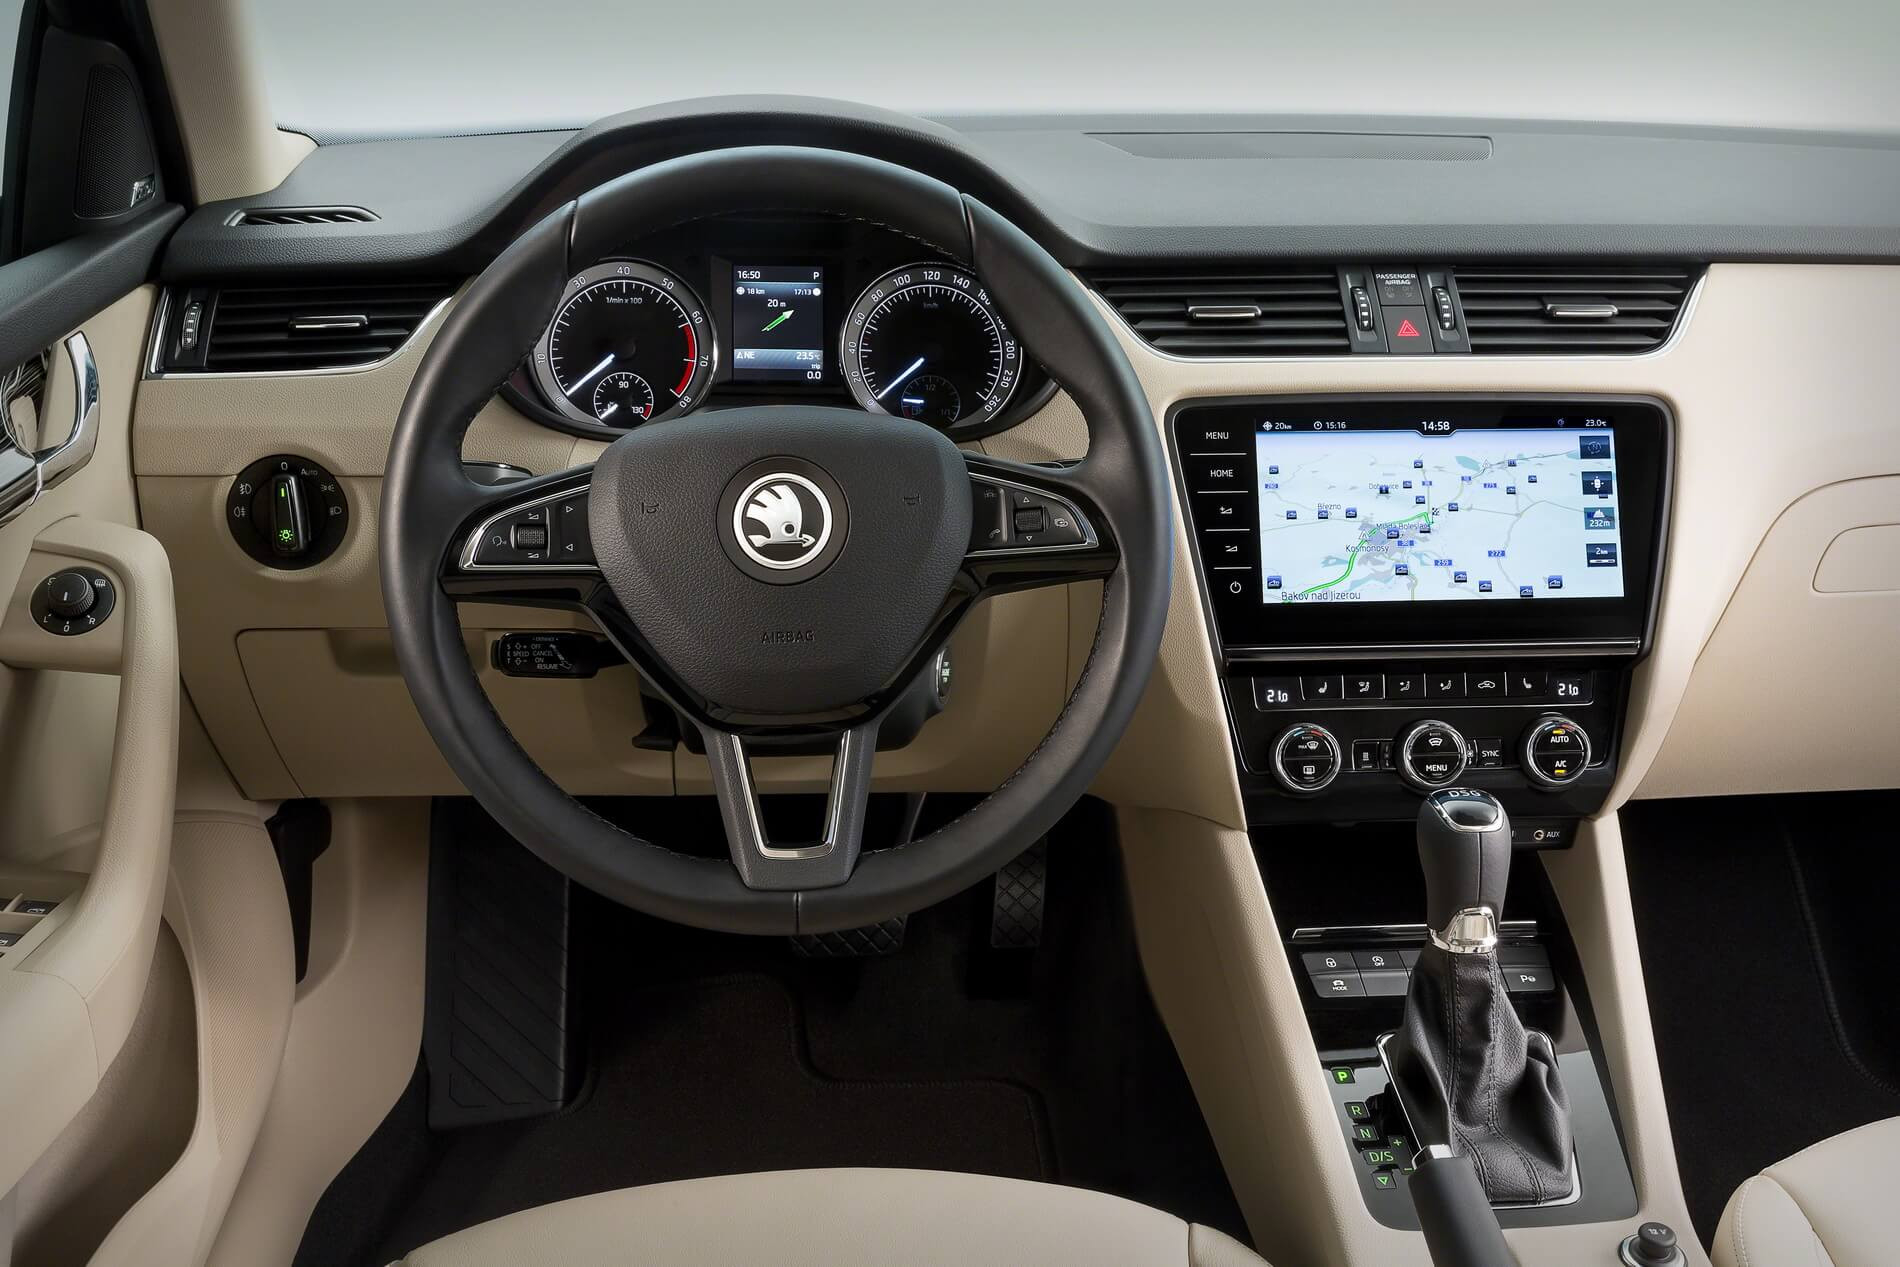 New Skoda Octavia Interior Image Release Car